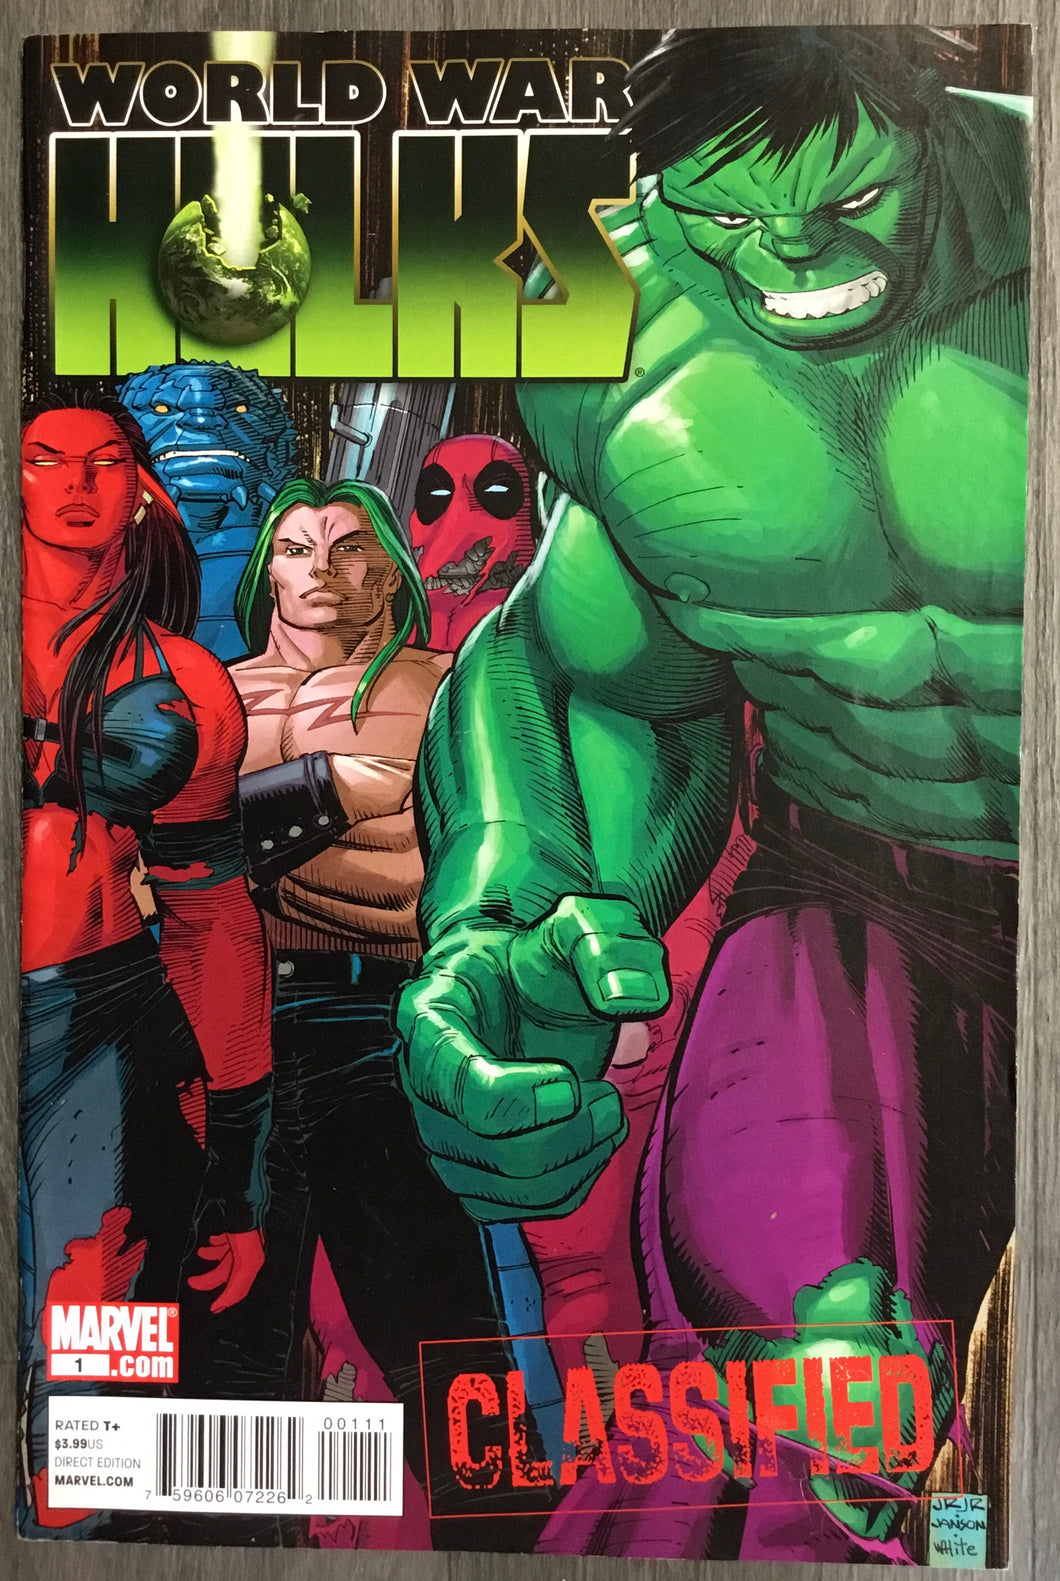 World War Hulks No. #1 2010 Marvel Comics